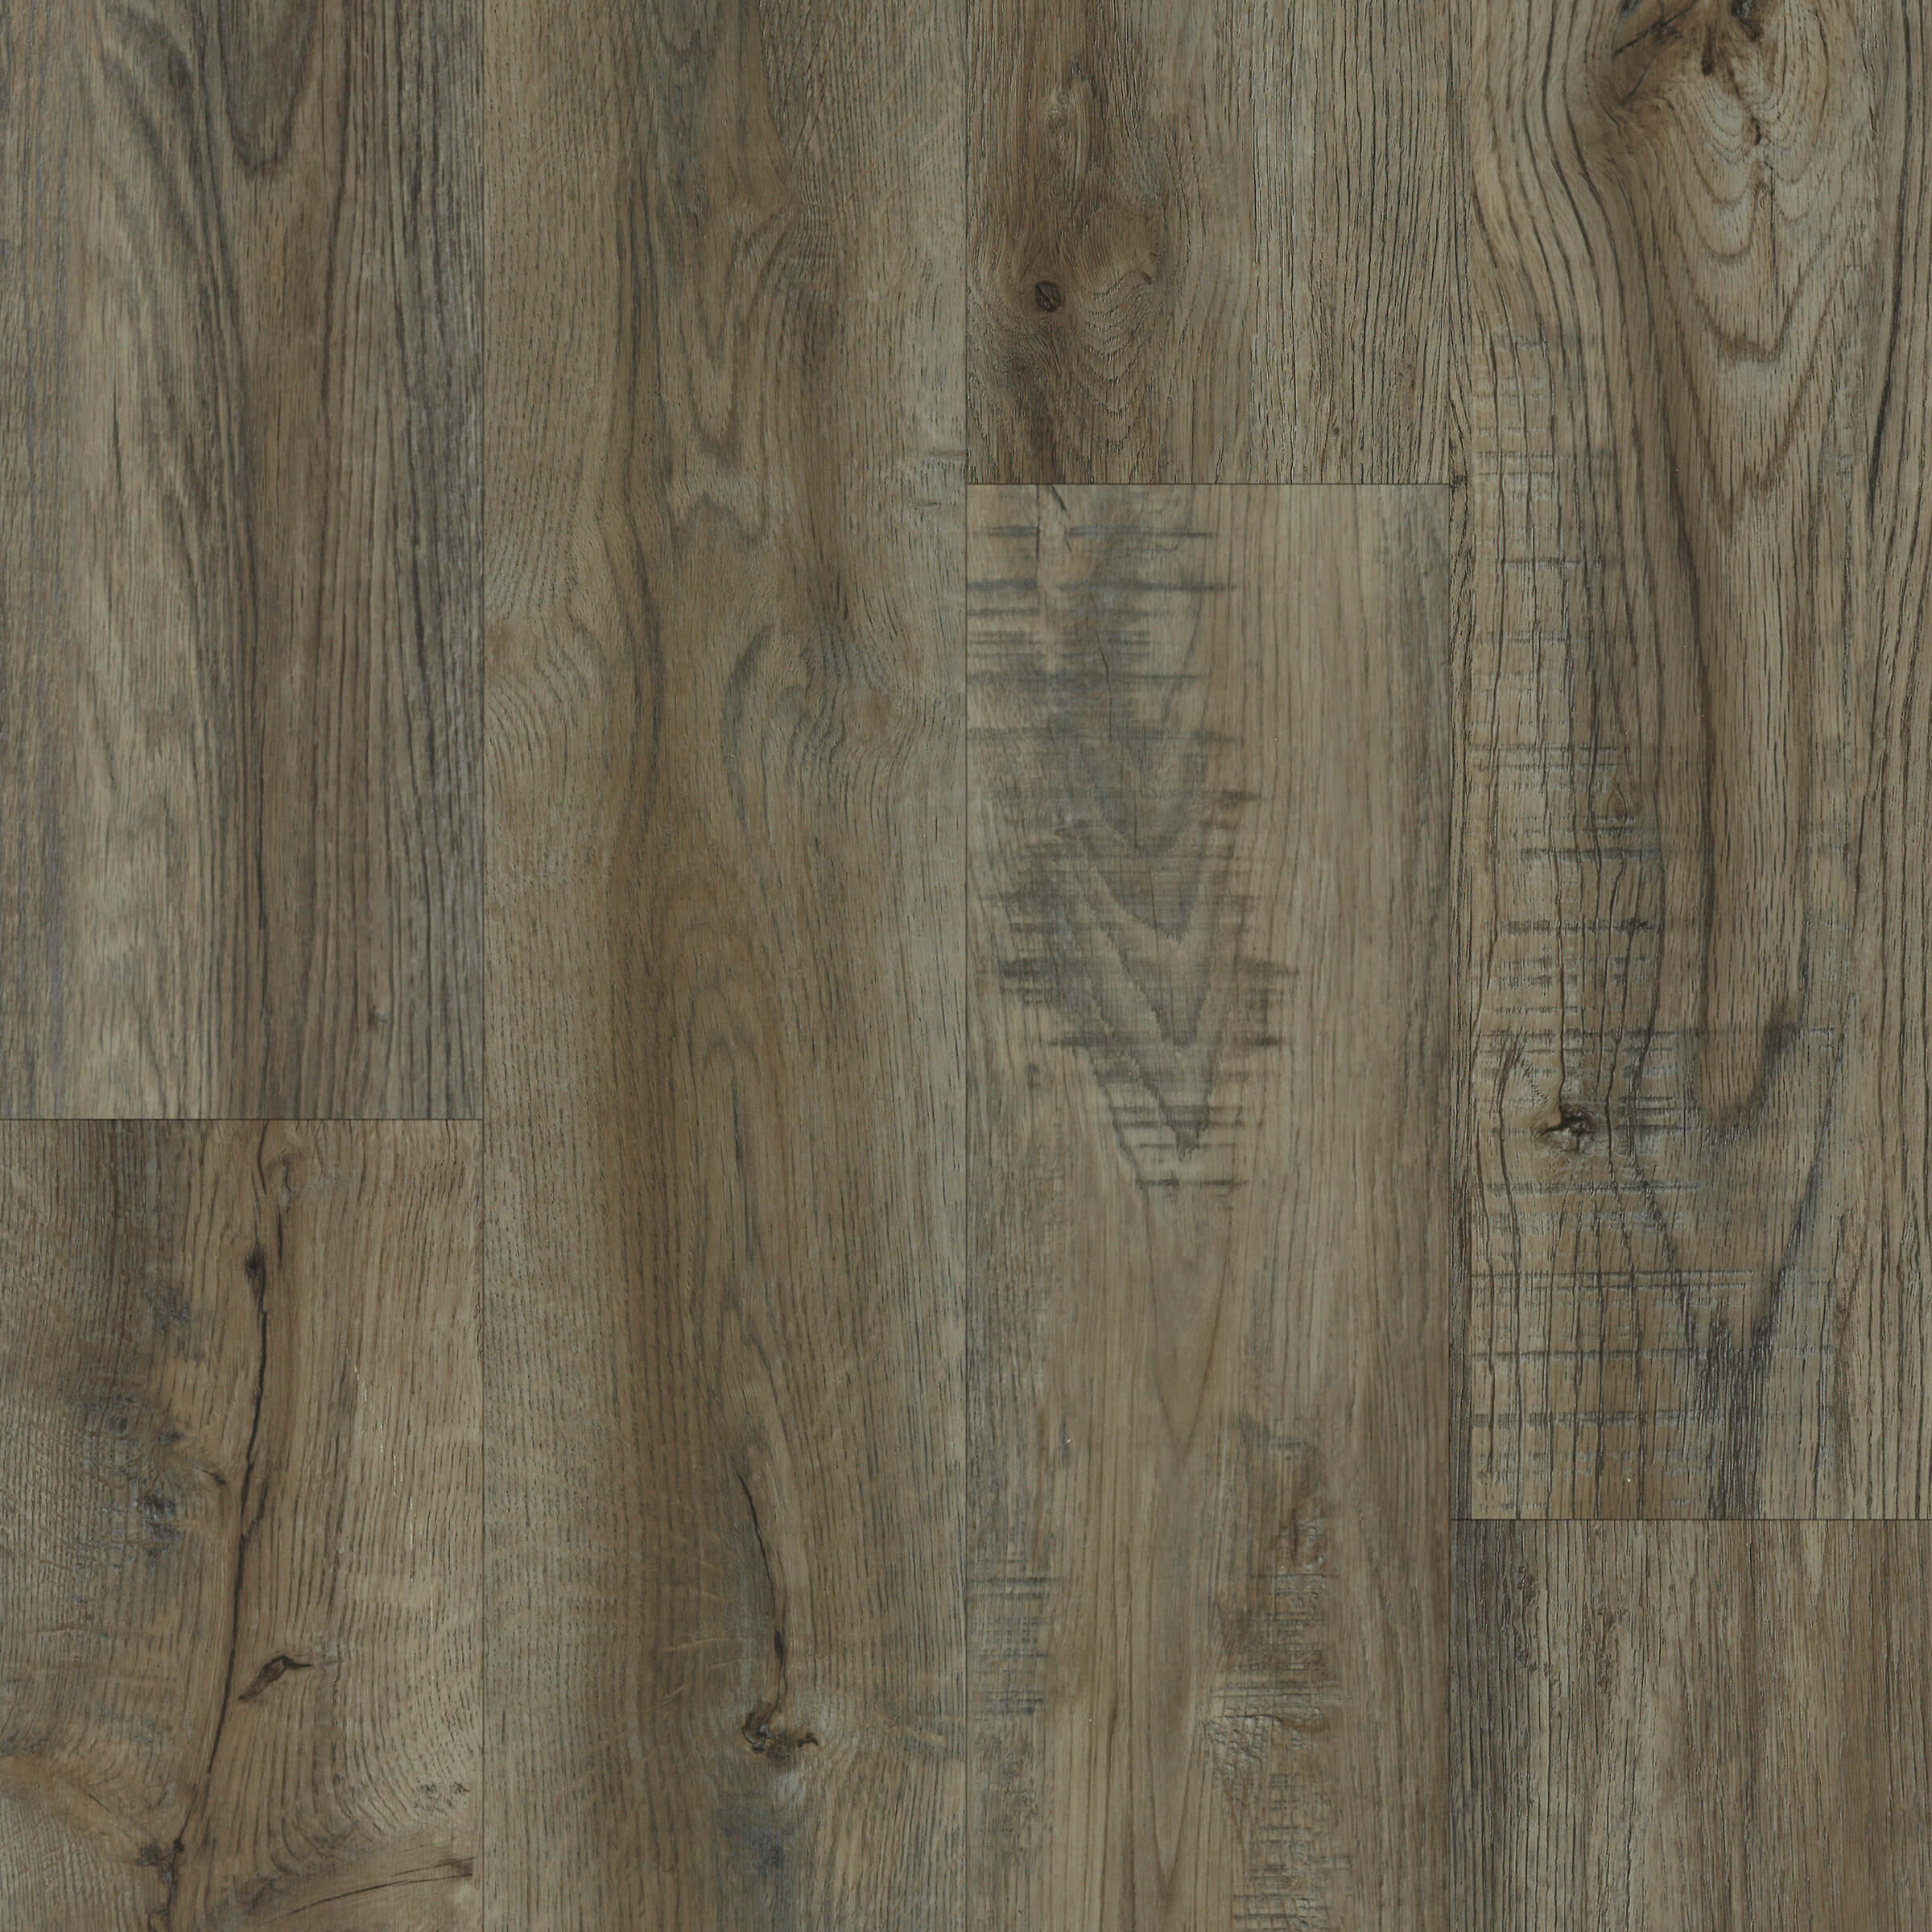 Luxury Vinyl Plank Tile Flooring, Best Vinyl Plank Flooring With Cork Backing